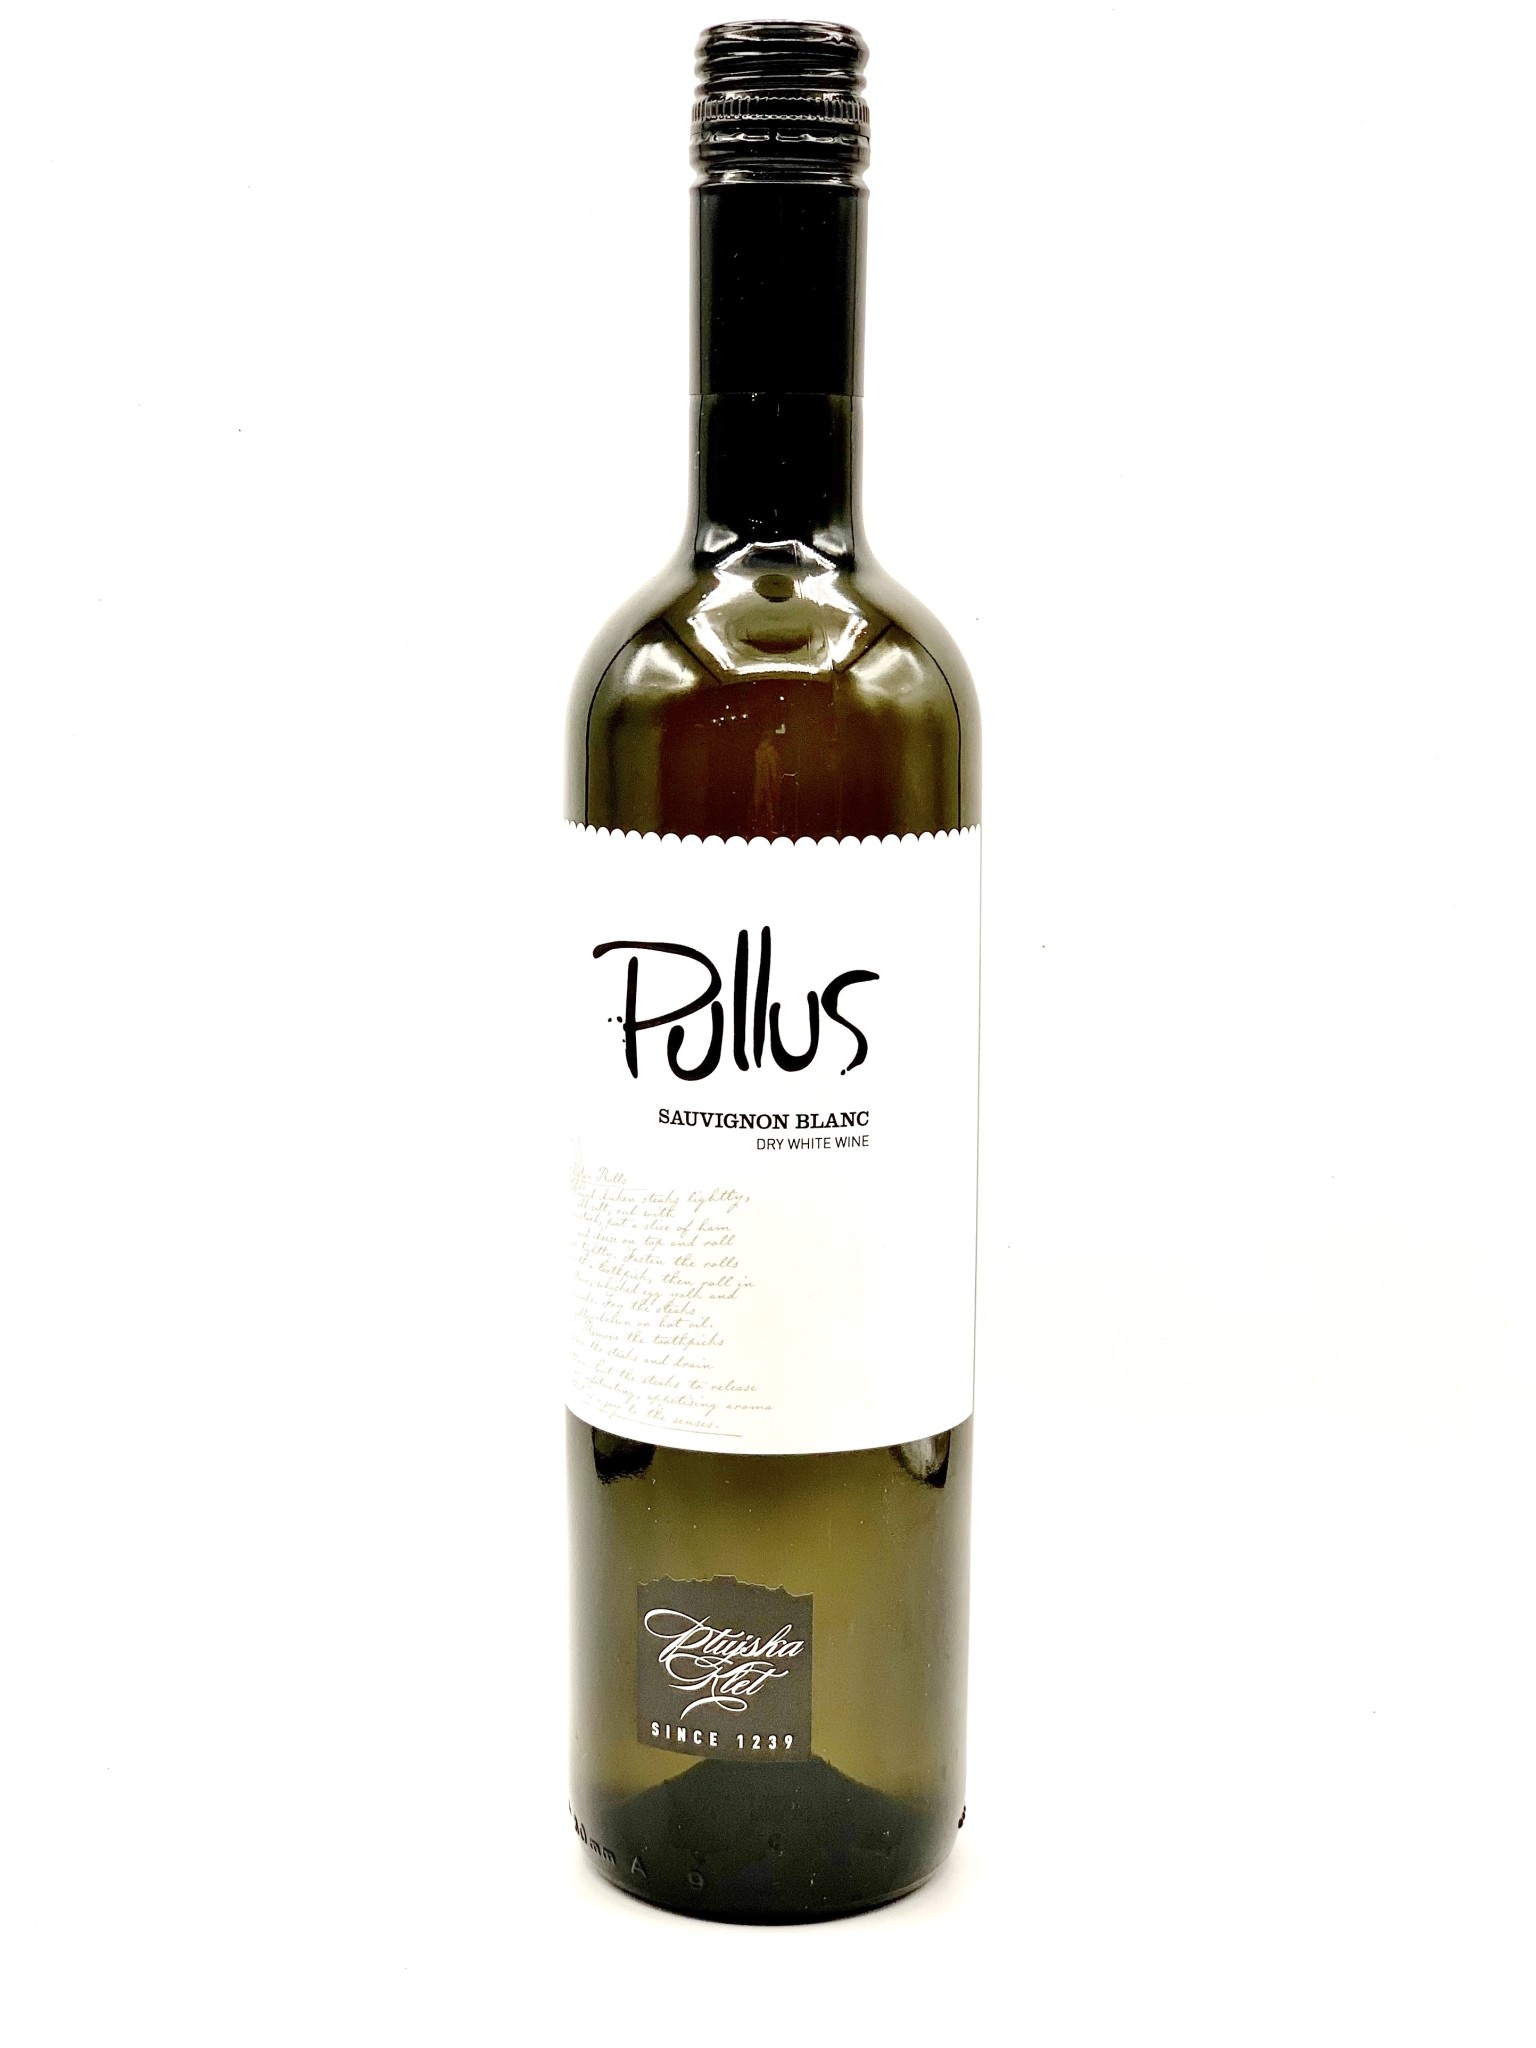 Slovenia Sauvignon Blanc 2022 Ptujska Klet “Pullus” 750ml